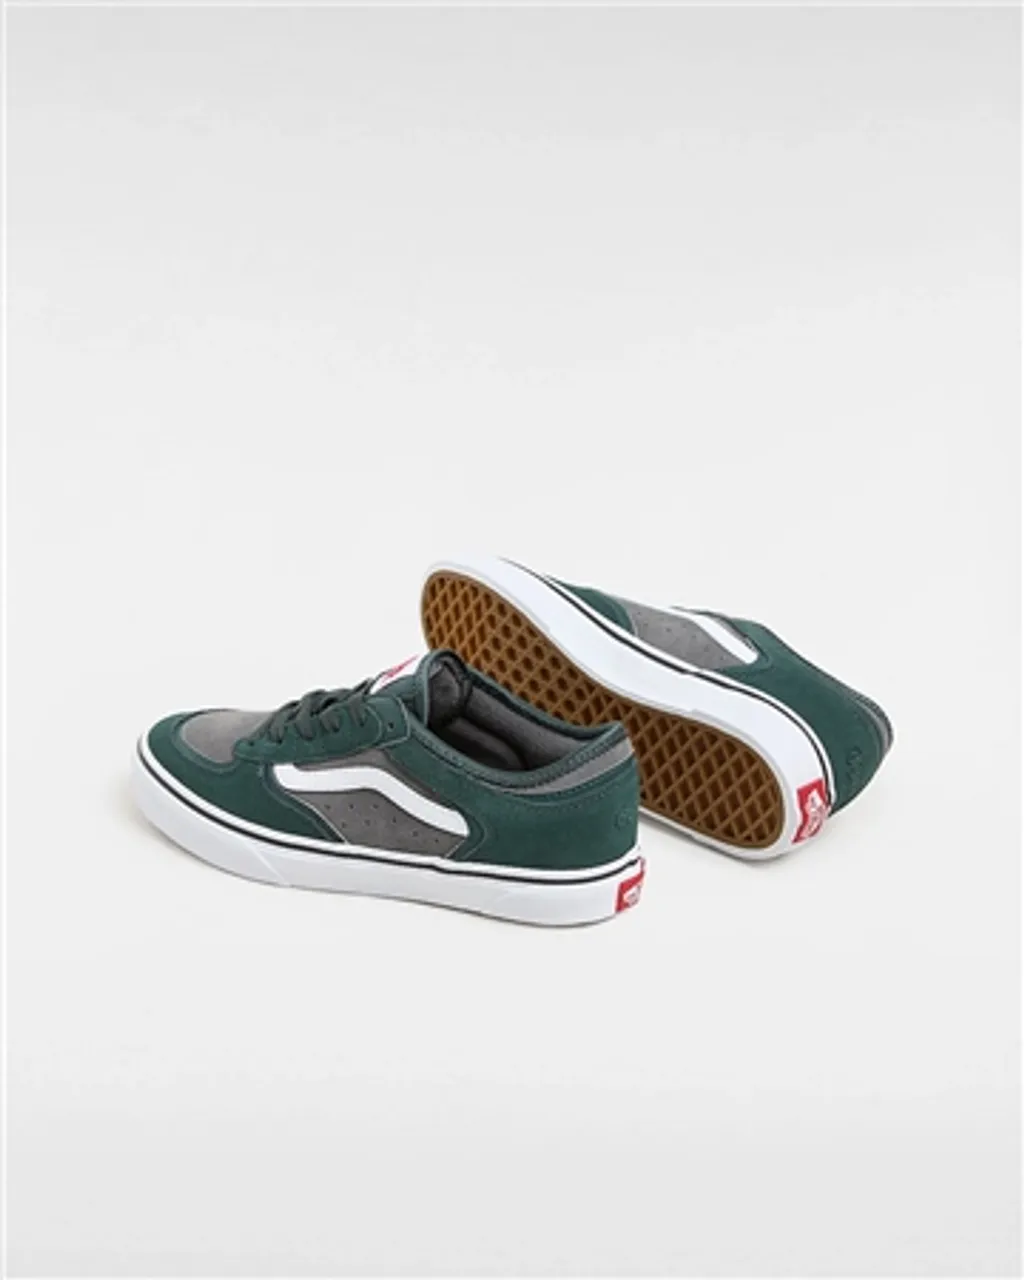 Vans Boys Rowley Classic Shoes - Green Gables & White - UK 3 (EU 35)